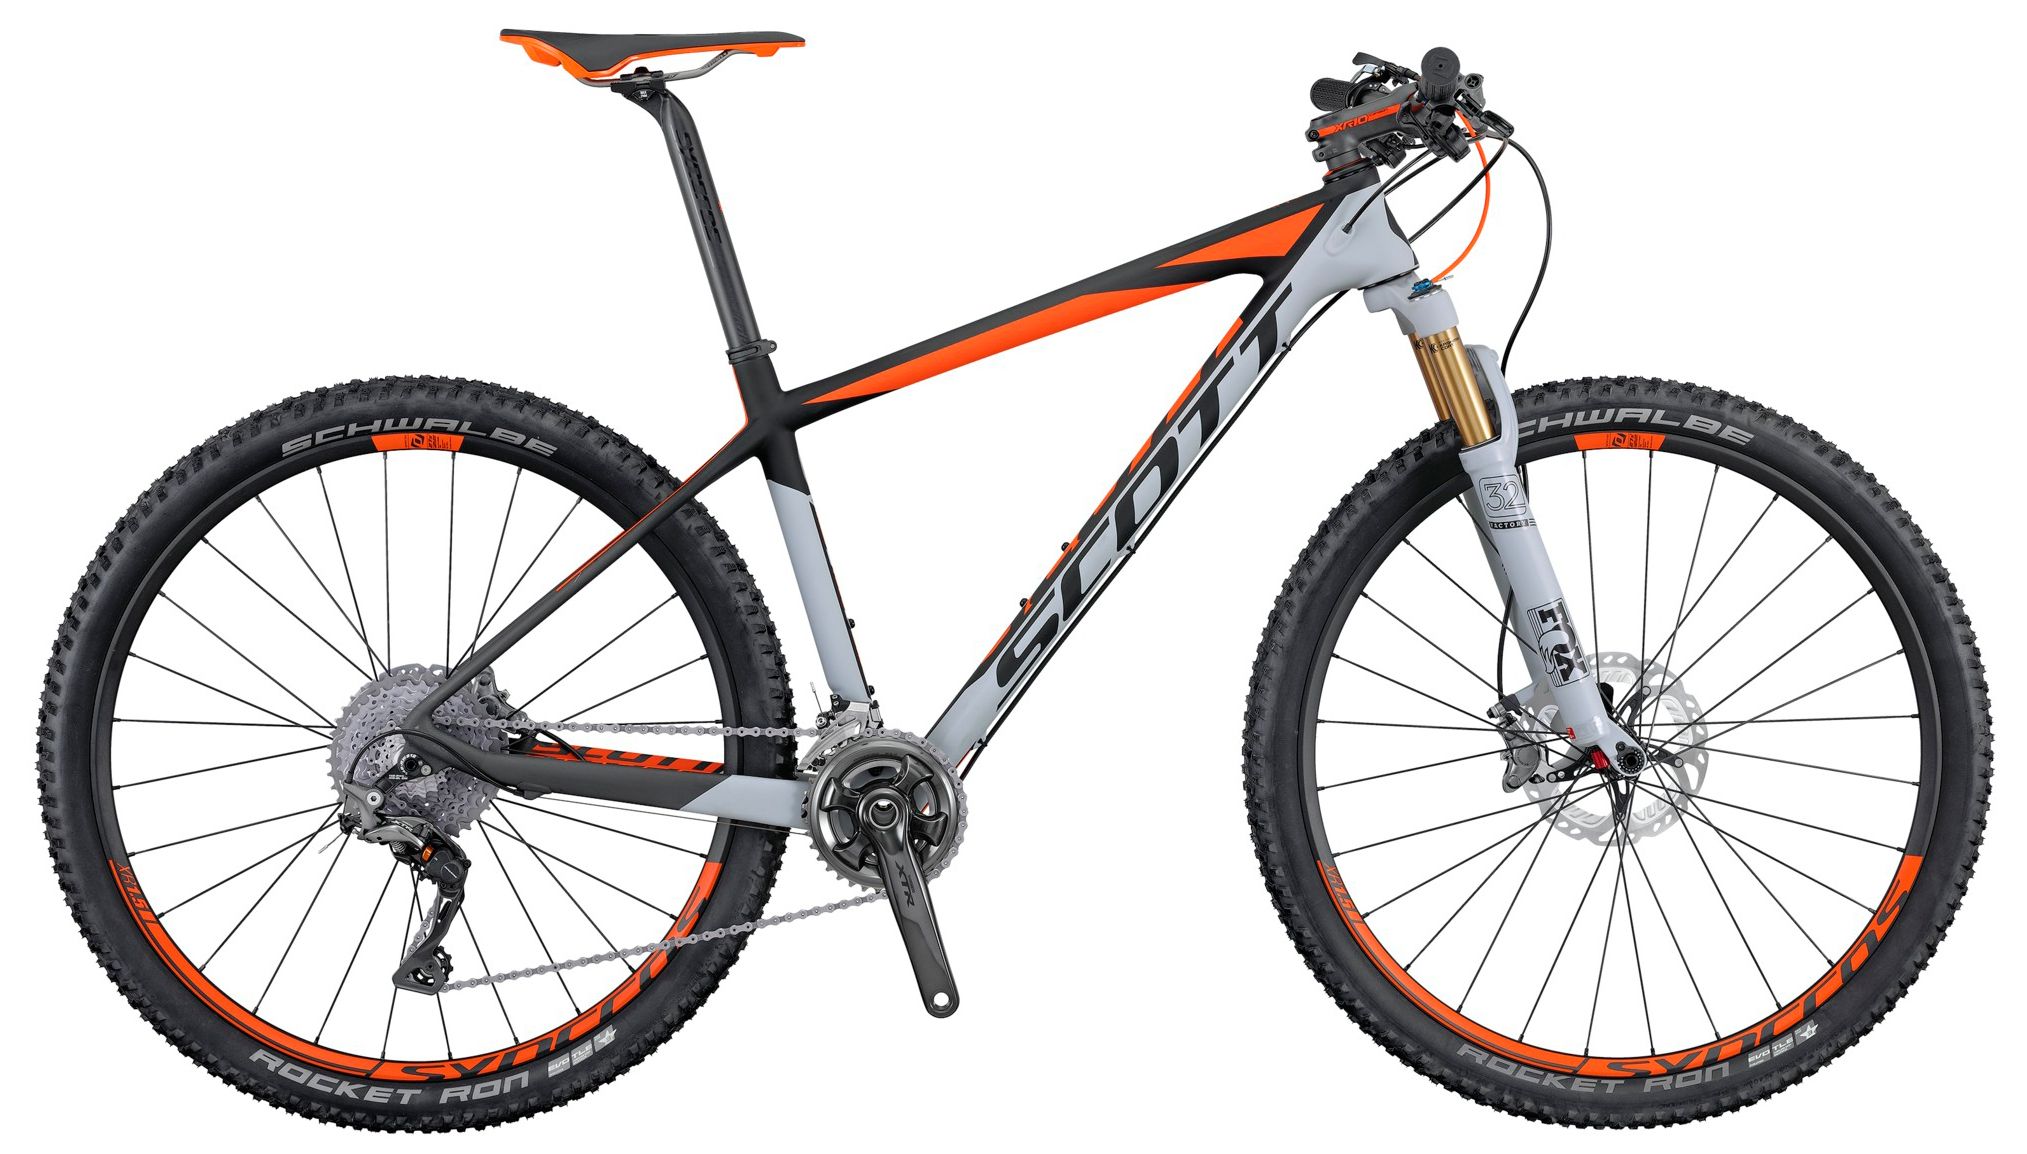  Отзывы о Горном велосипеде Scott Scale 700 Premium 2016